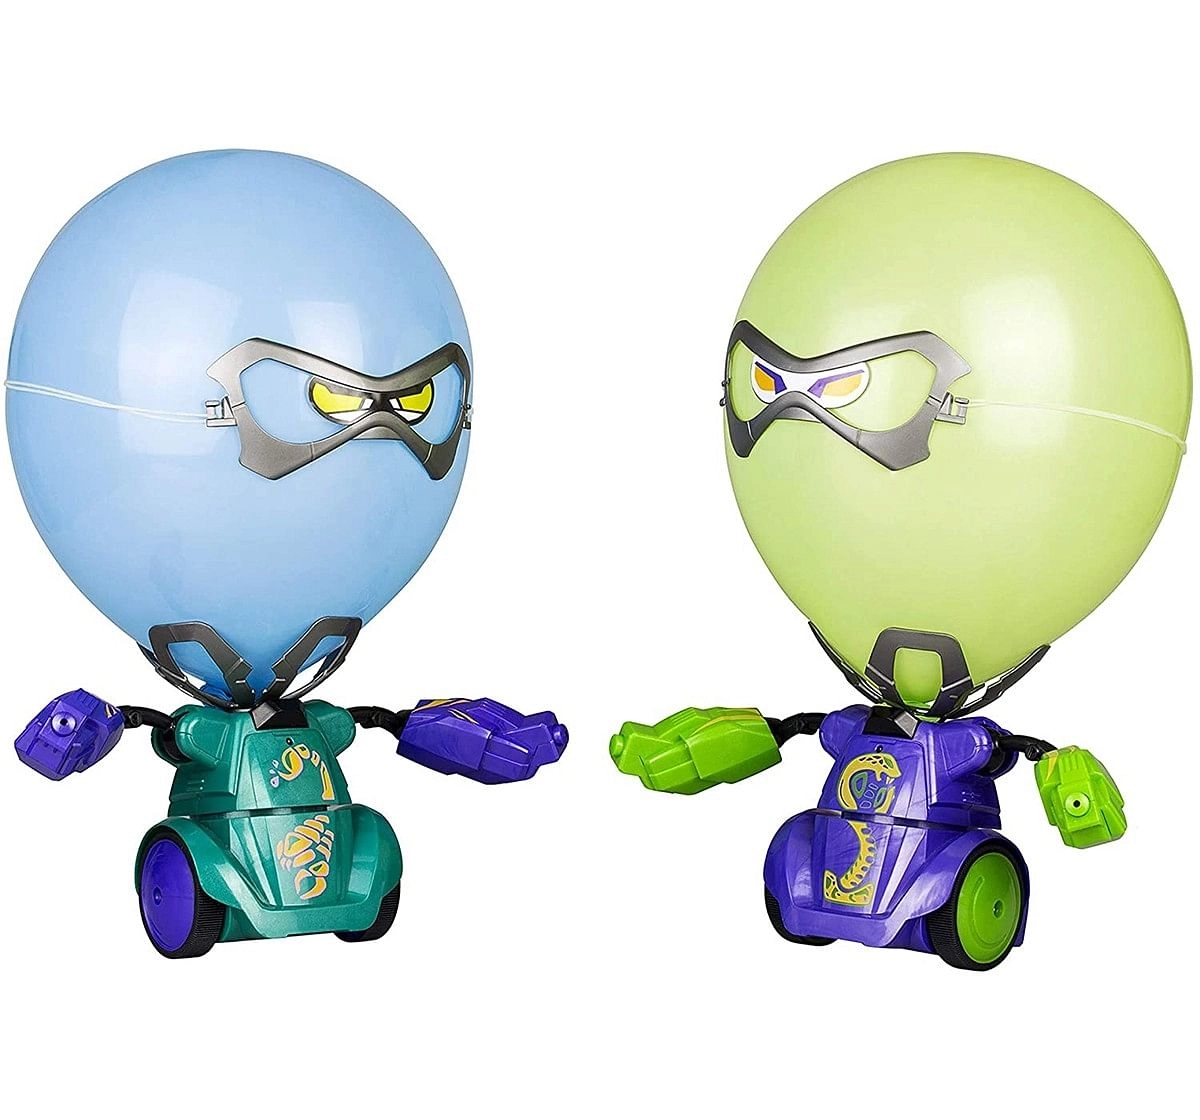 SLIVERLIT ROBO KOMBAT BALLOON PUNCHER Robotics for Kids age 5Y+